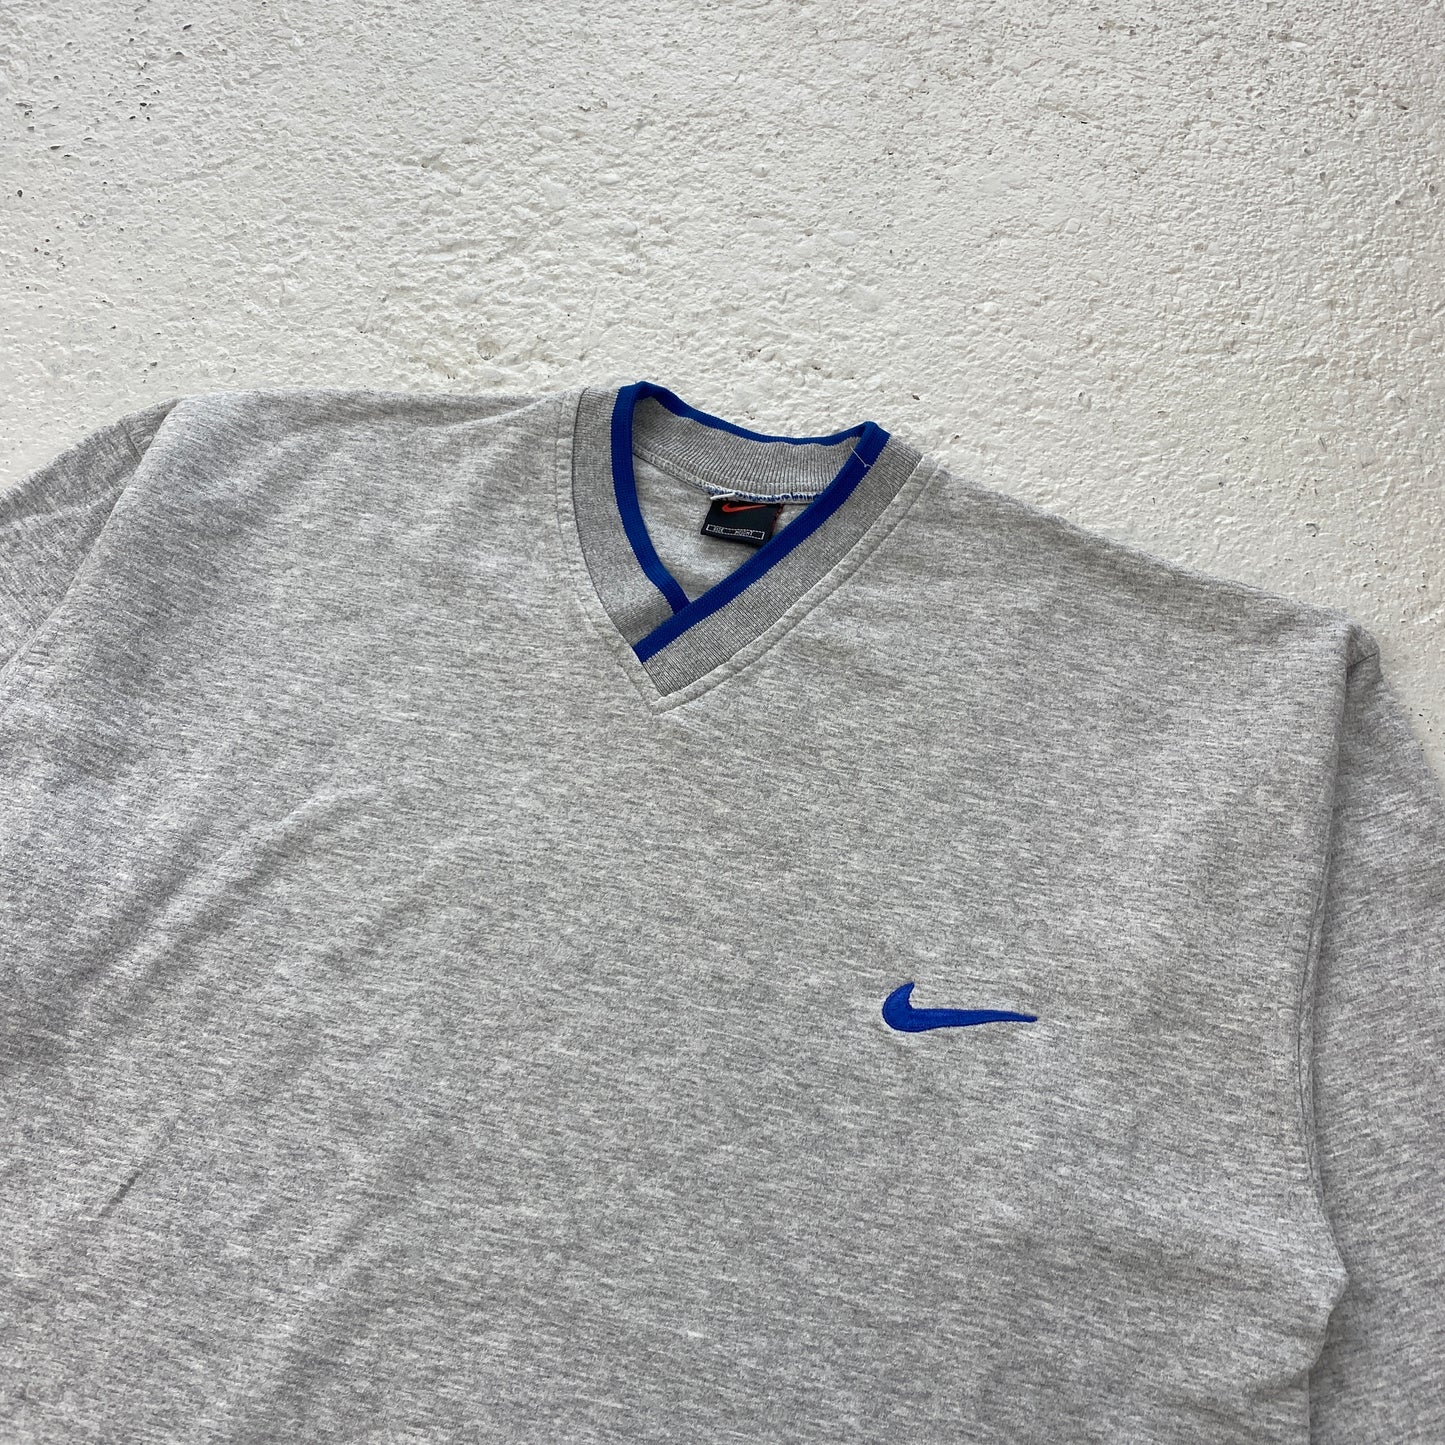 Nike RARE heavyweight v-neck sweater (L)